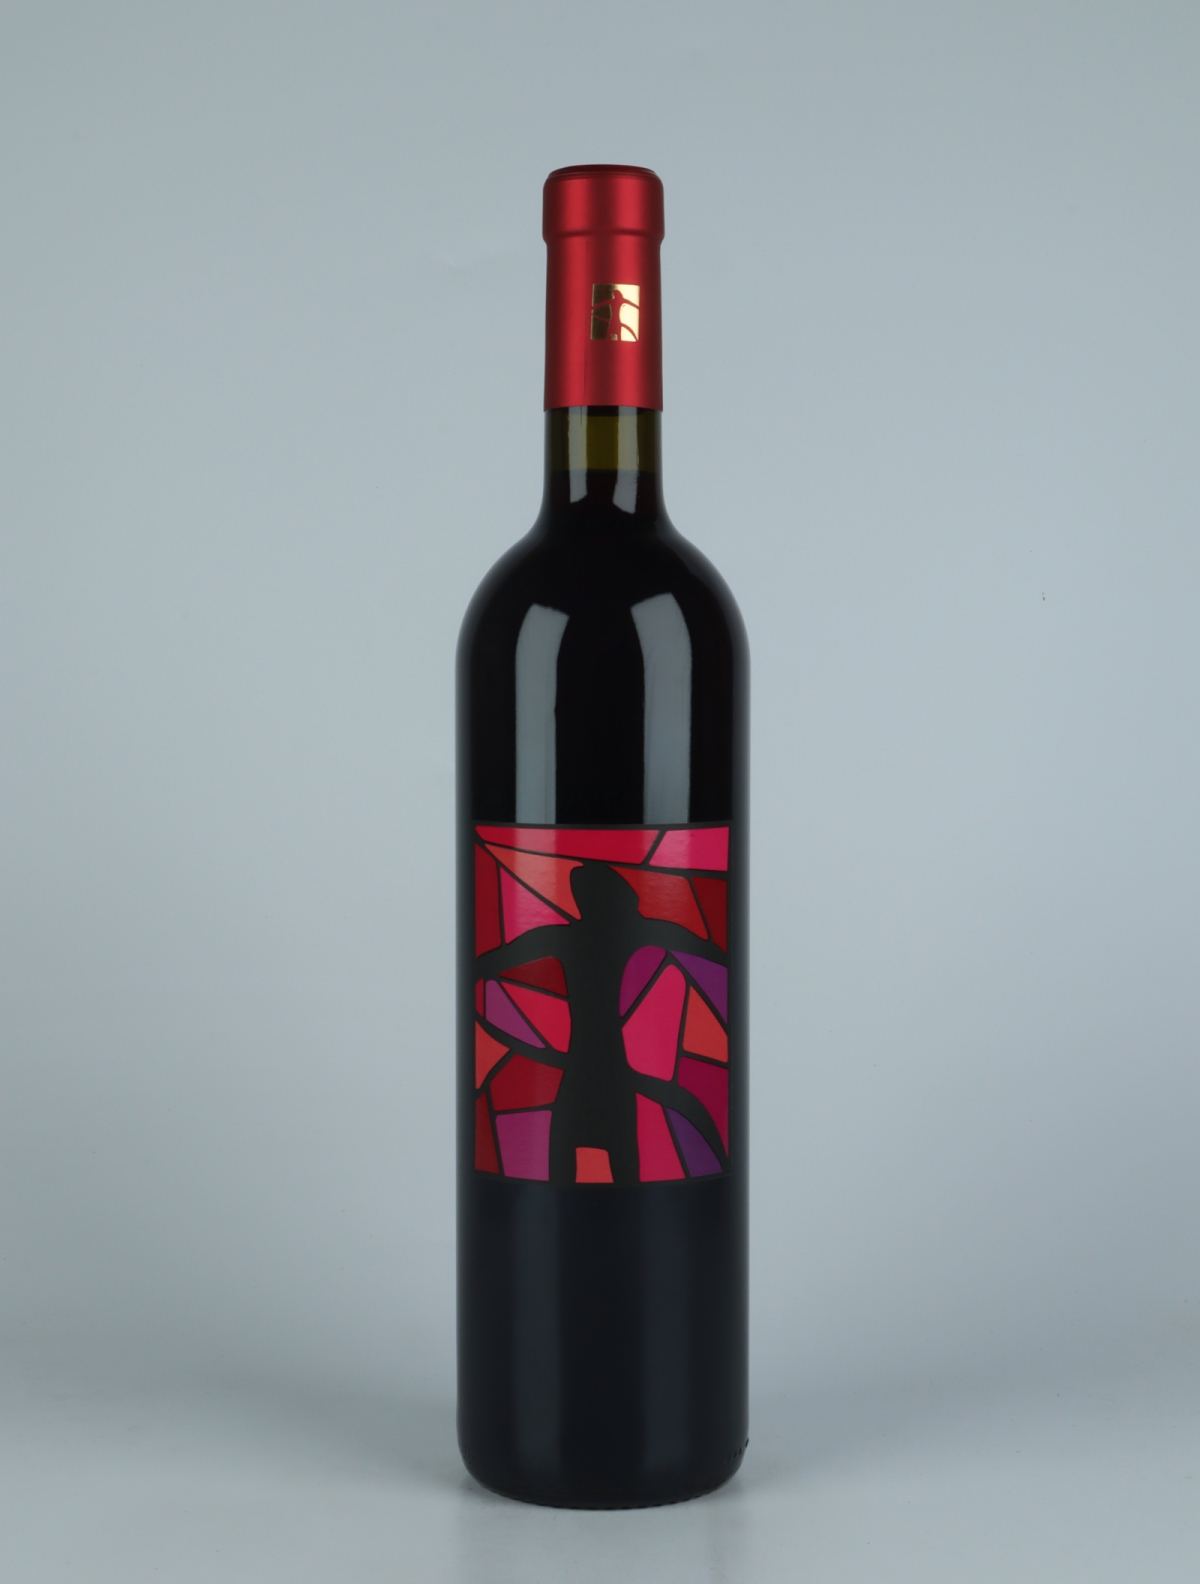 A bottle 2020 Gumbe di Amirai Red wine from Tenuta Selvadolce, Liguria in Italy